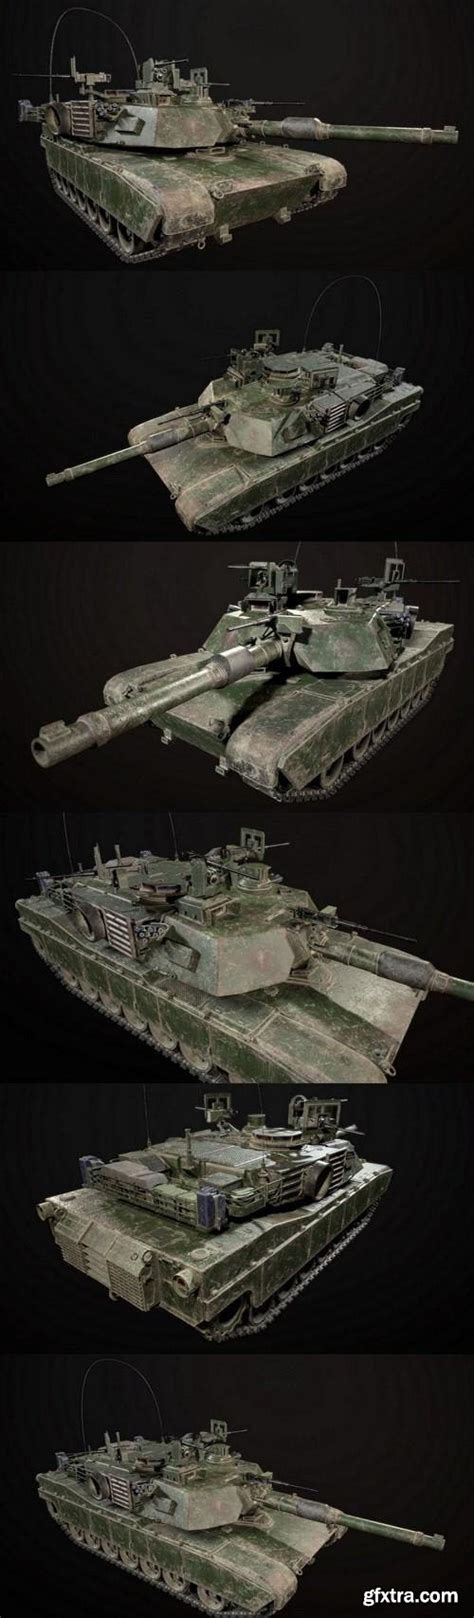 M1a2 Abrams Main Battle Tank 3d Model Gfxtra